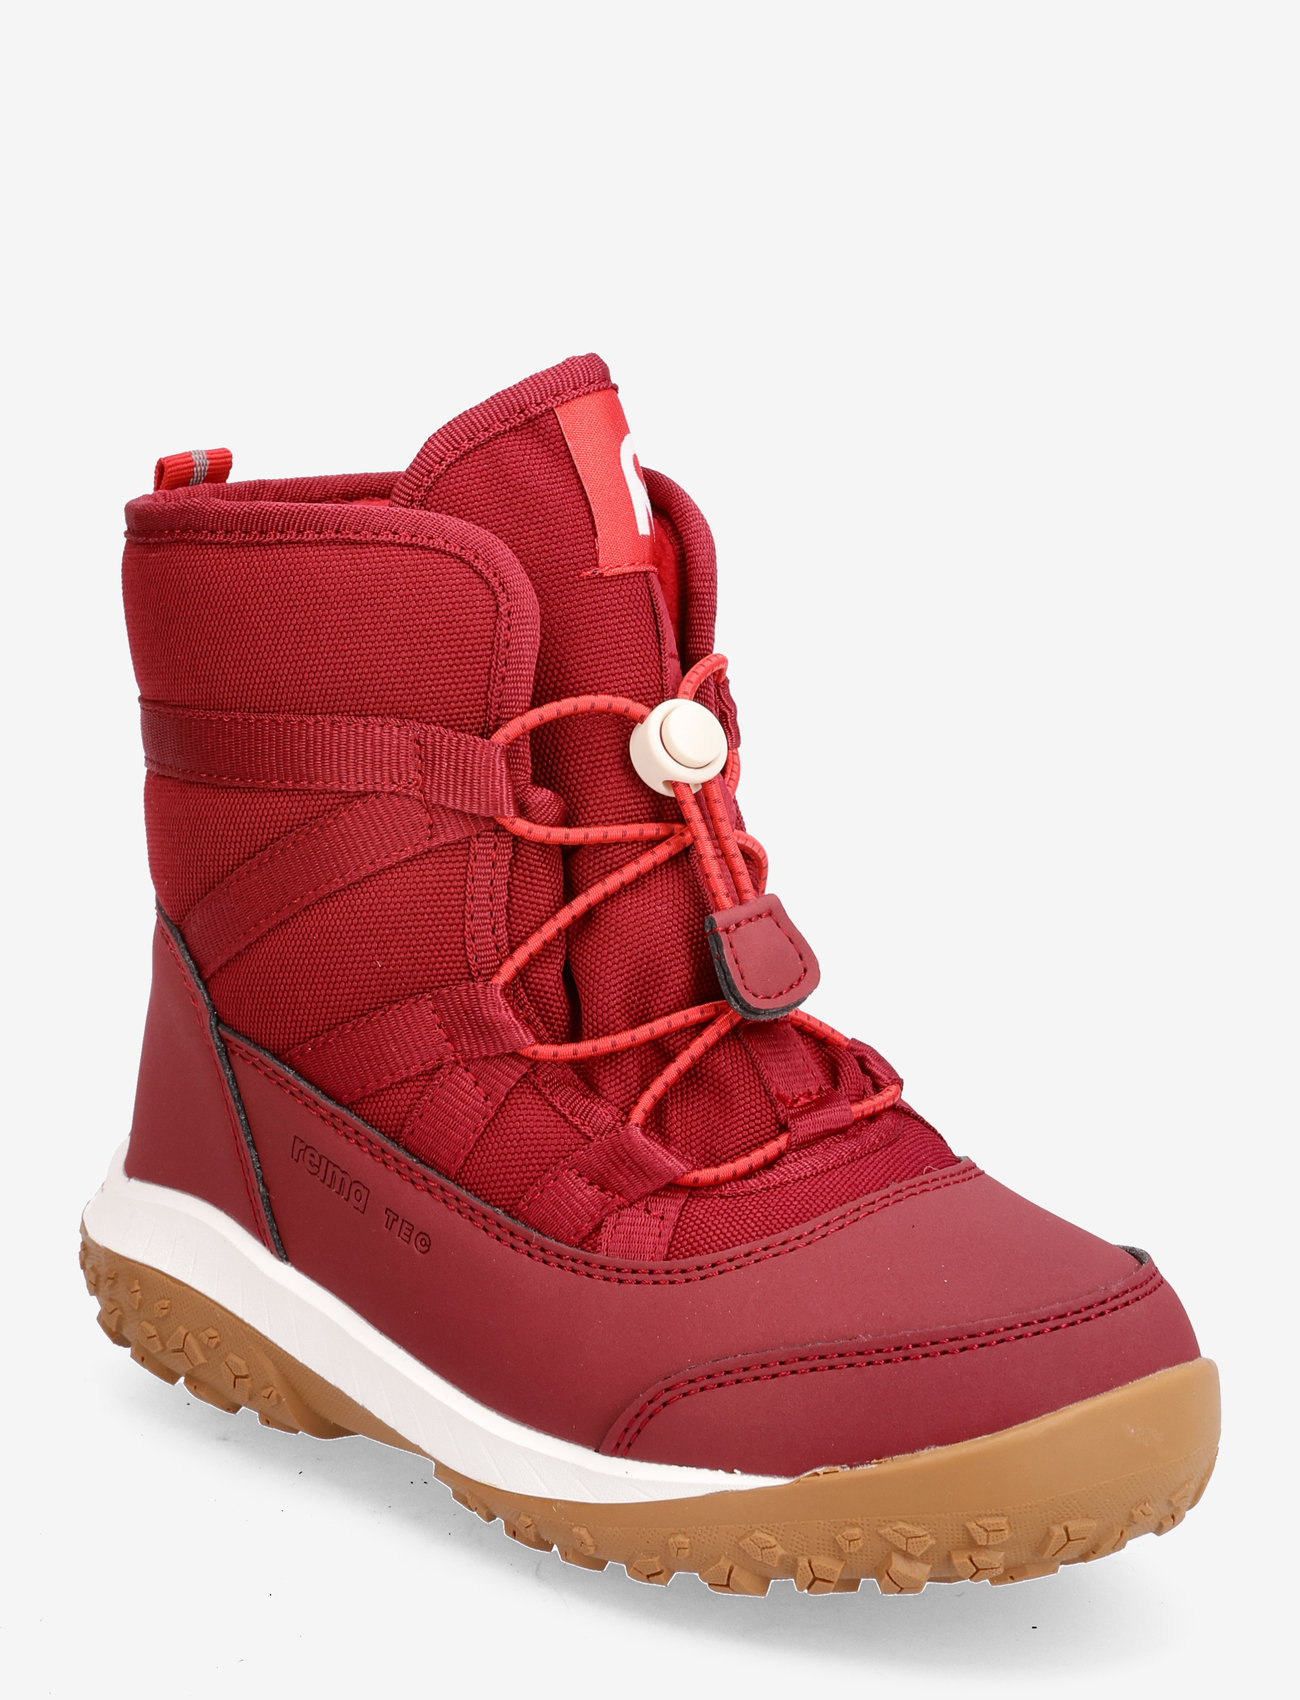 Reima - Reimatec winter boots, Myrsky - lapset - jam red - 0